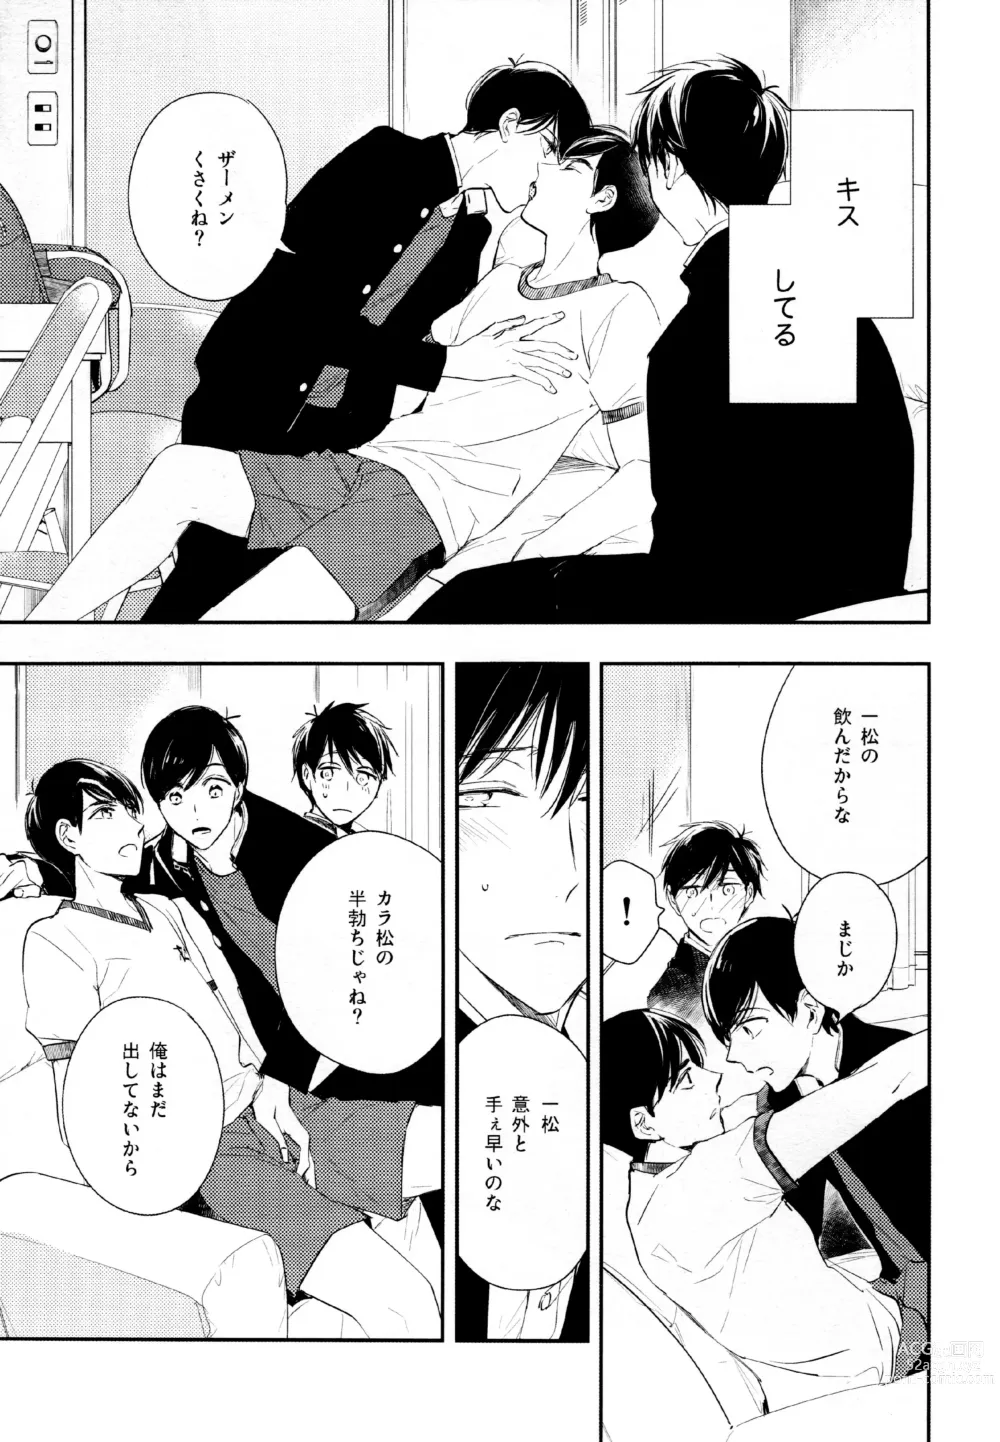 Page 24 of doujinshi Hikari ni Tsuite